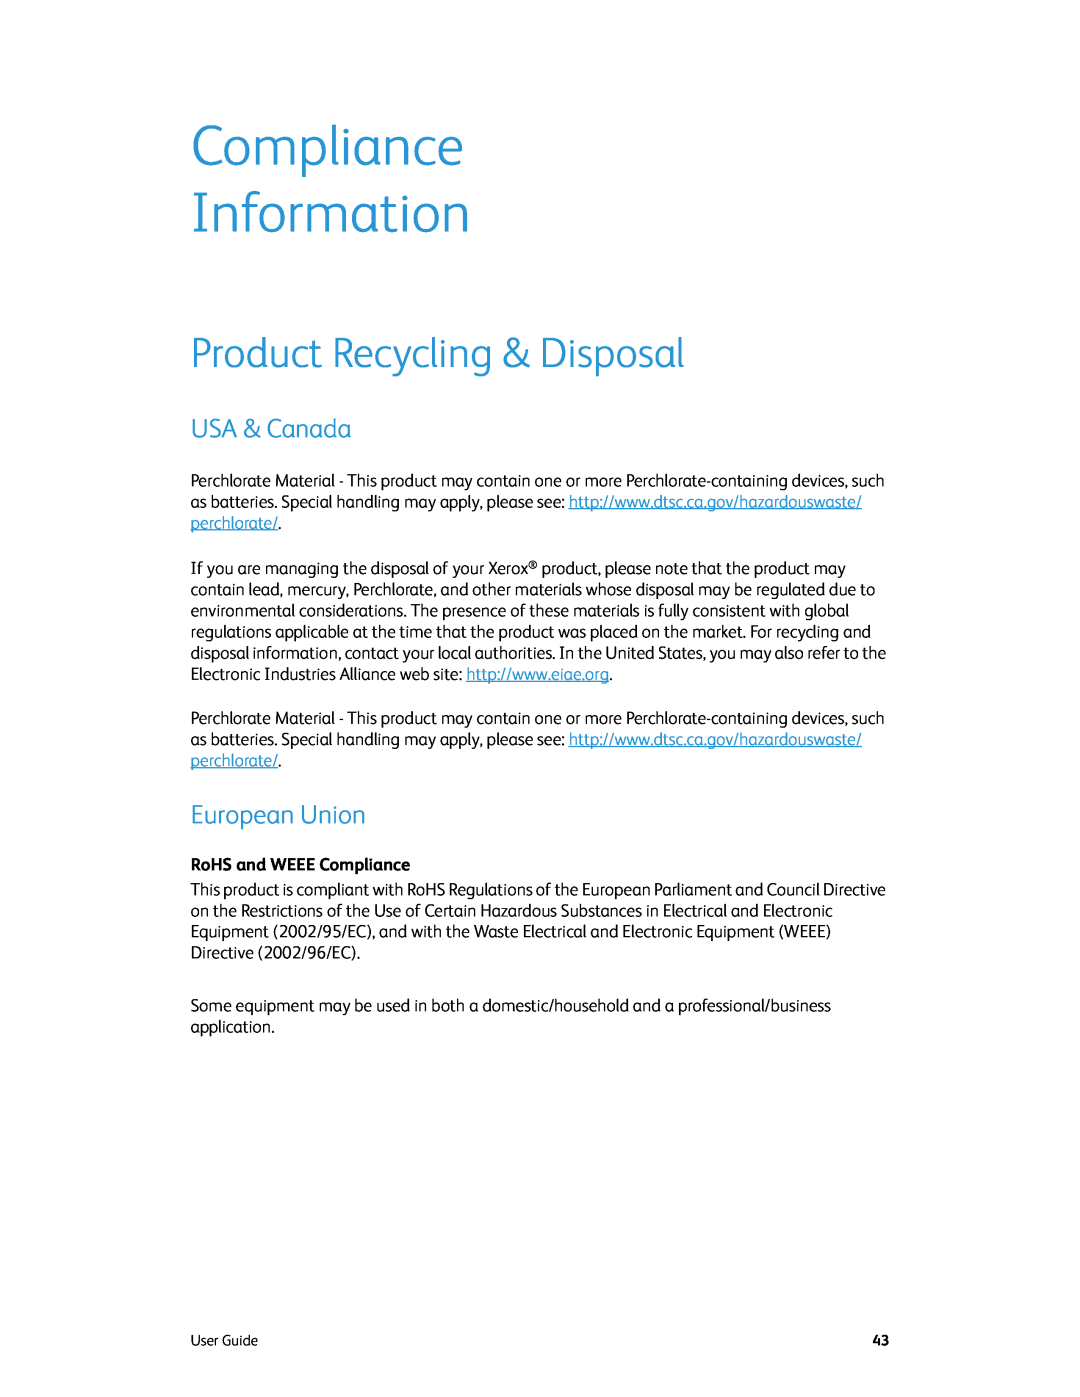 Xerox xerox manual Compliance Information, Product Recycling & Disposal, USA & Canada, European Union 